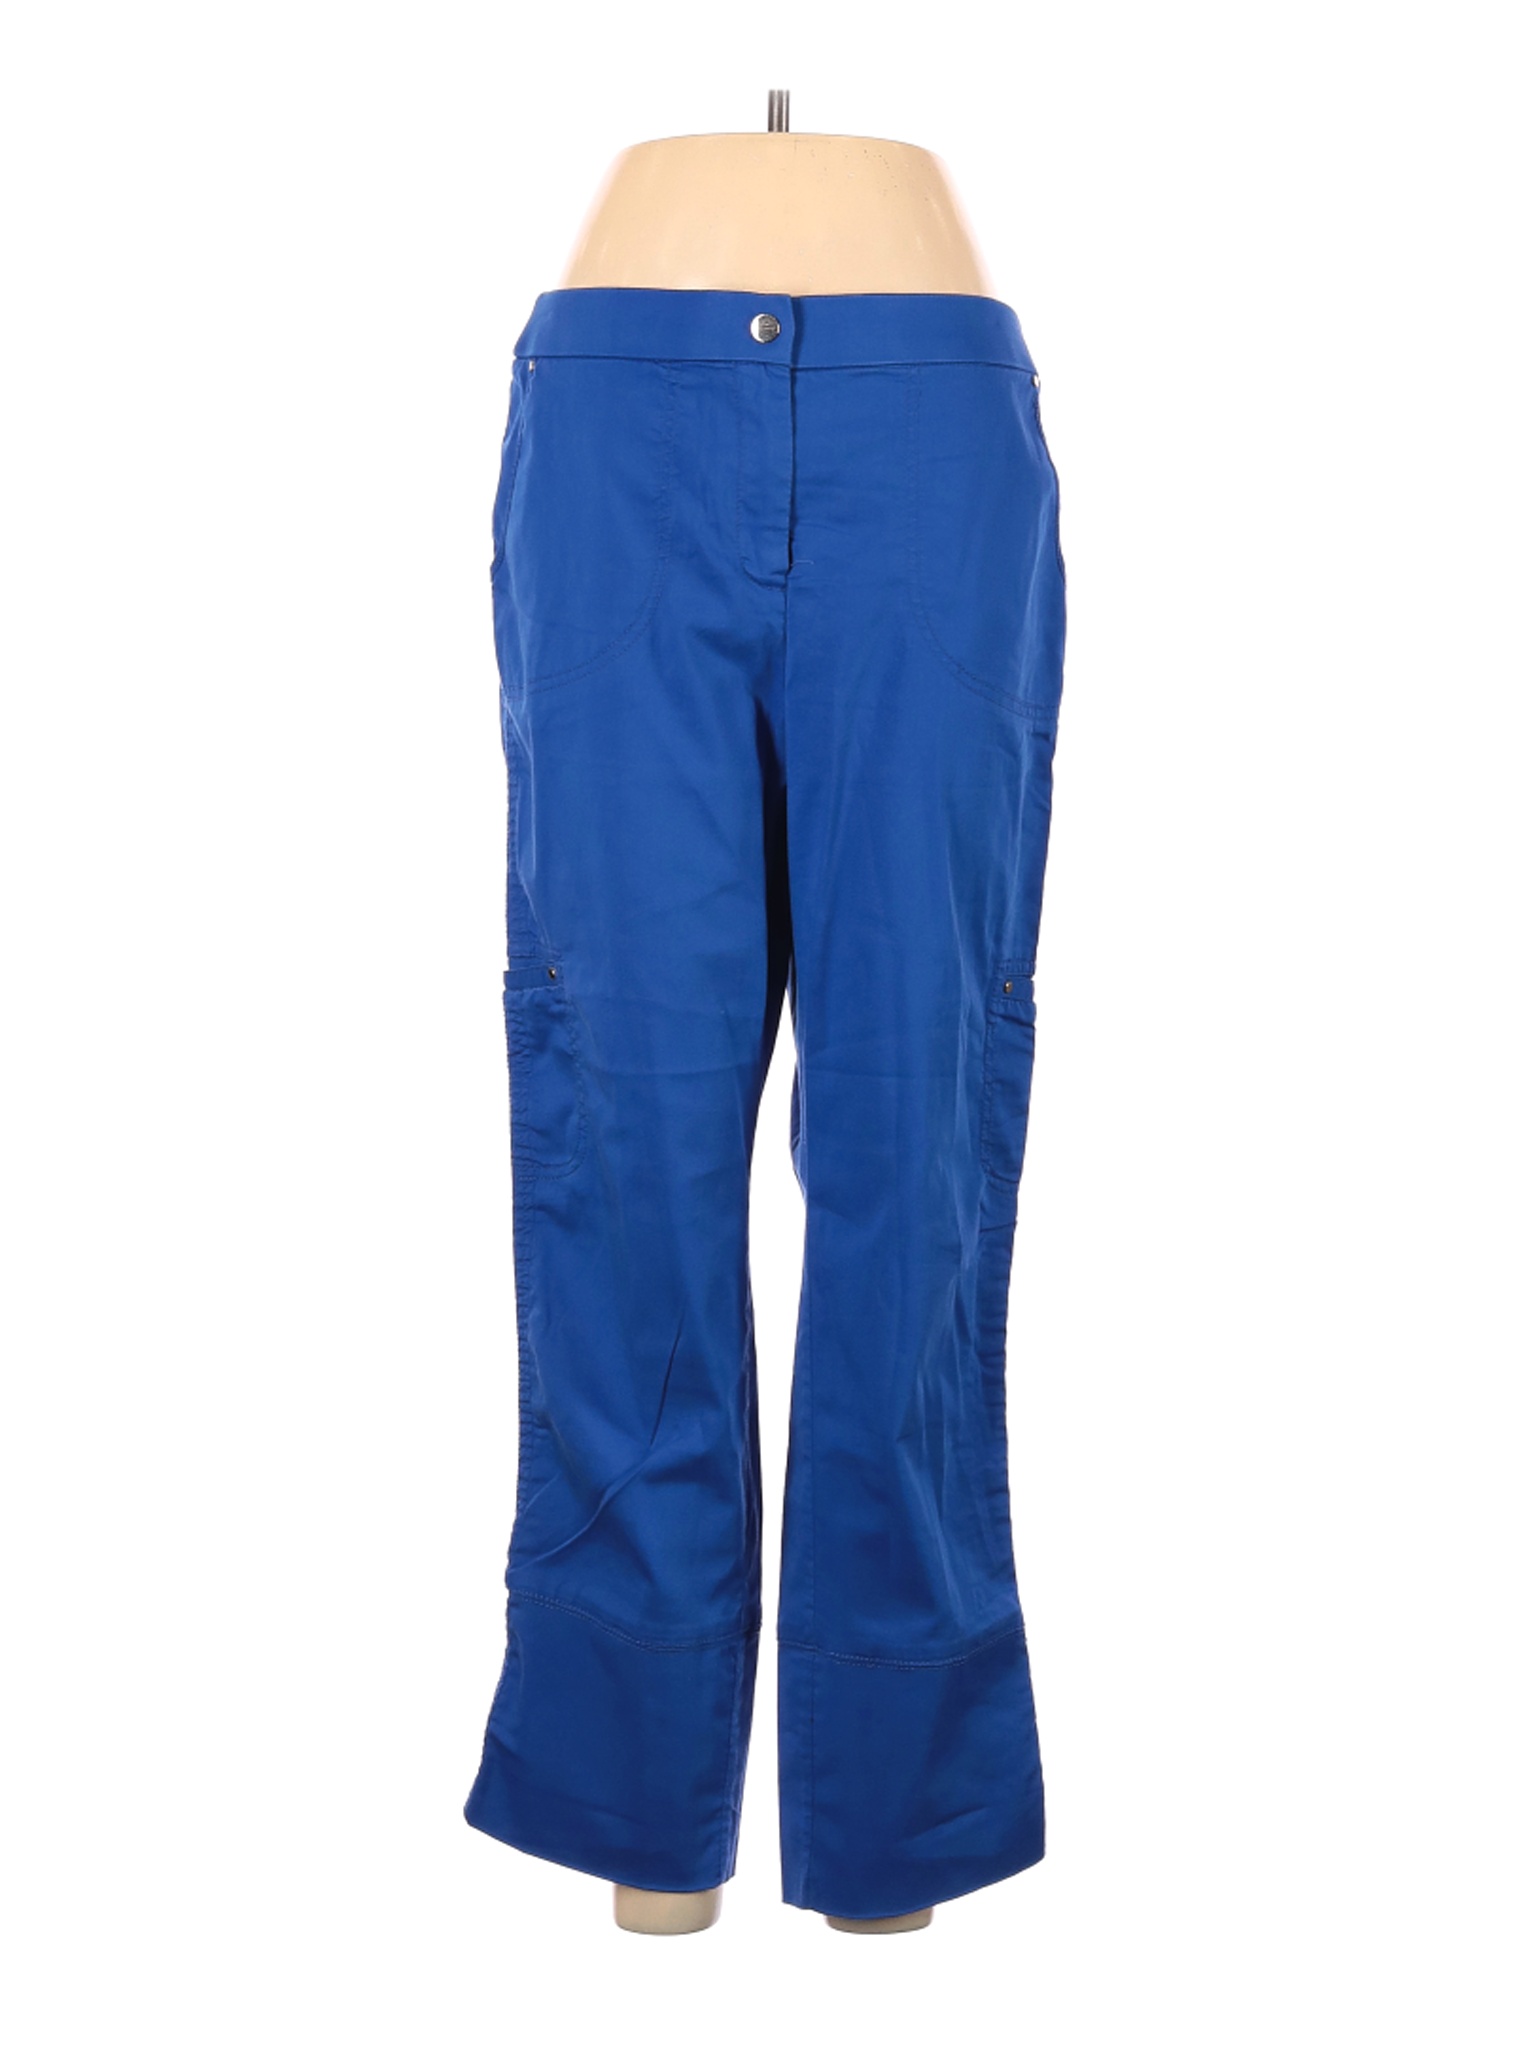 Chico's Women Blue Cargo Pants M | eBay